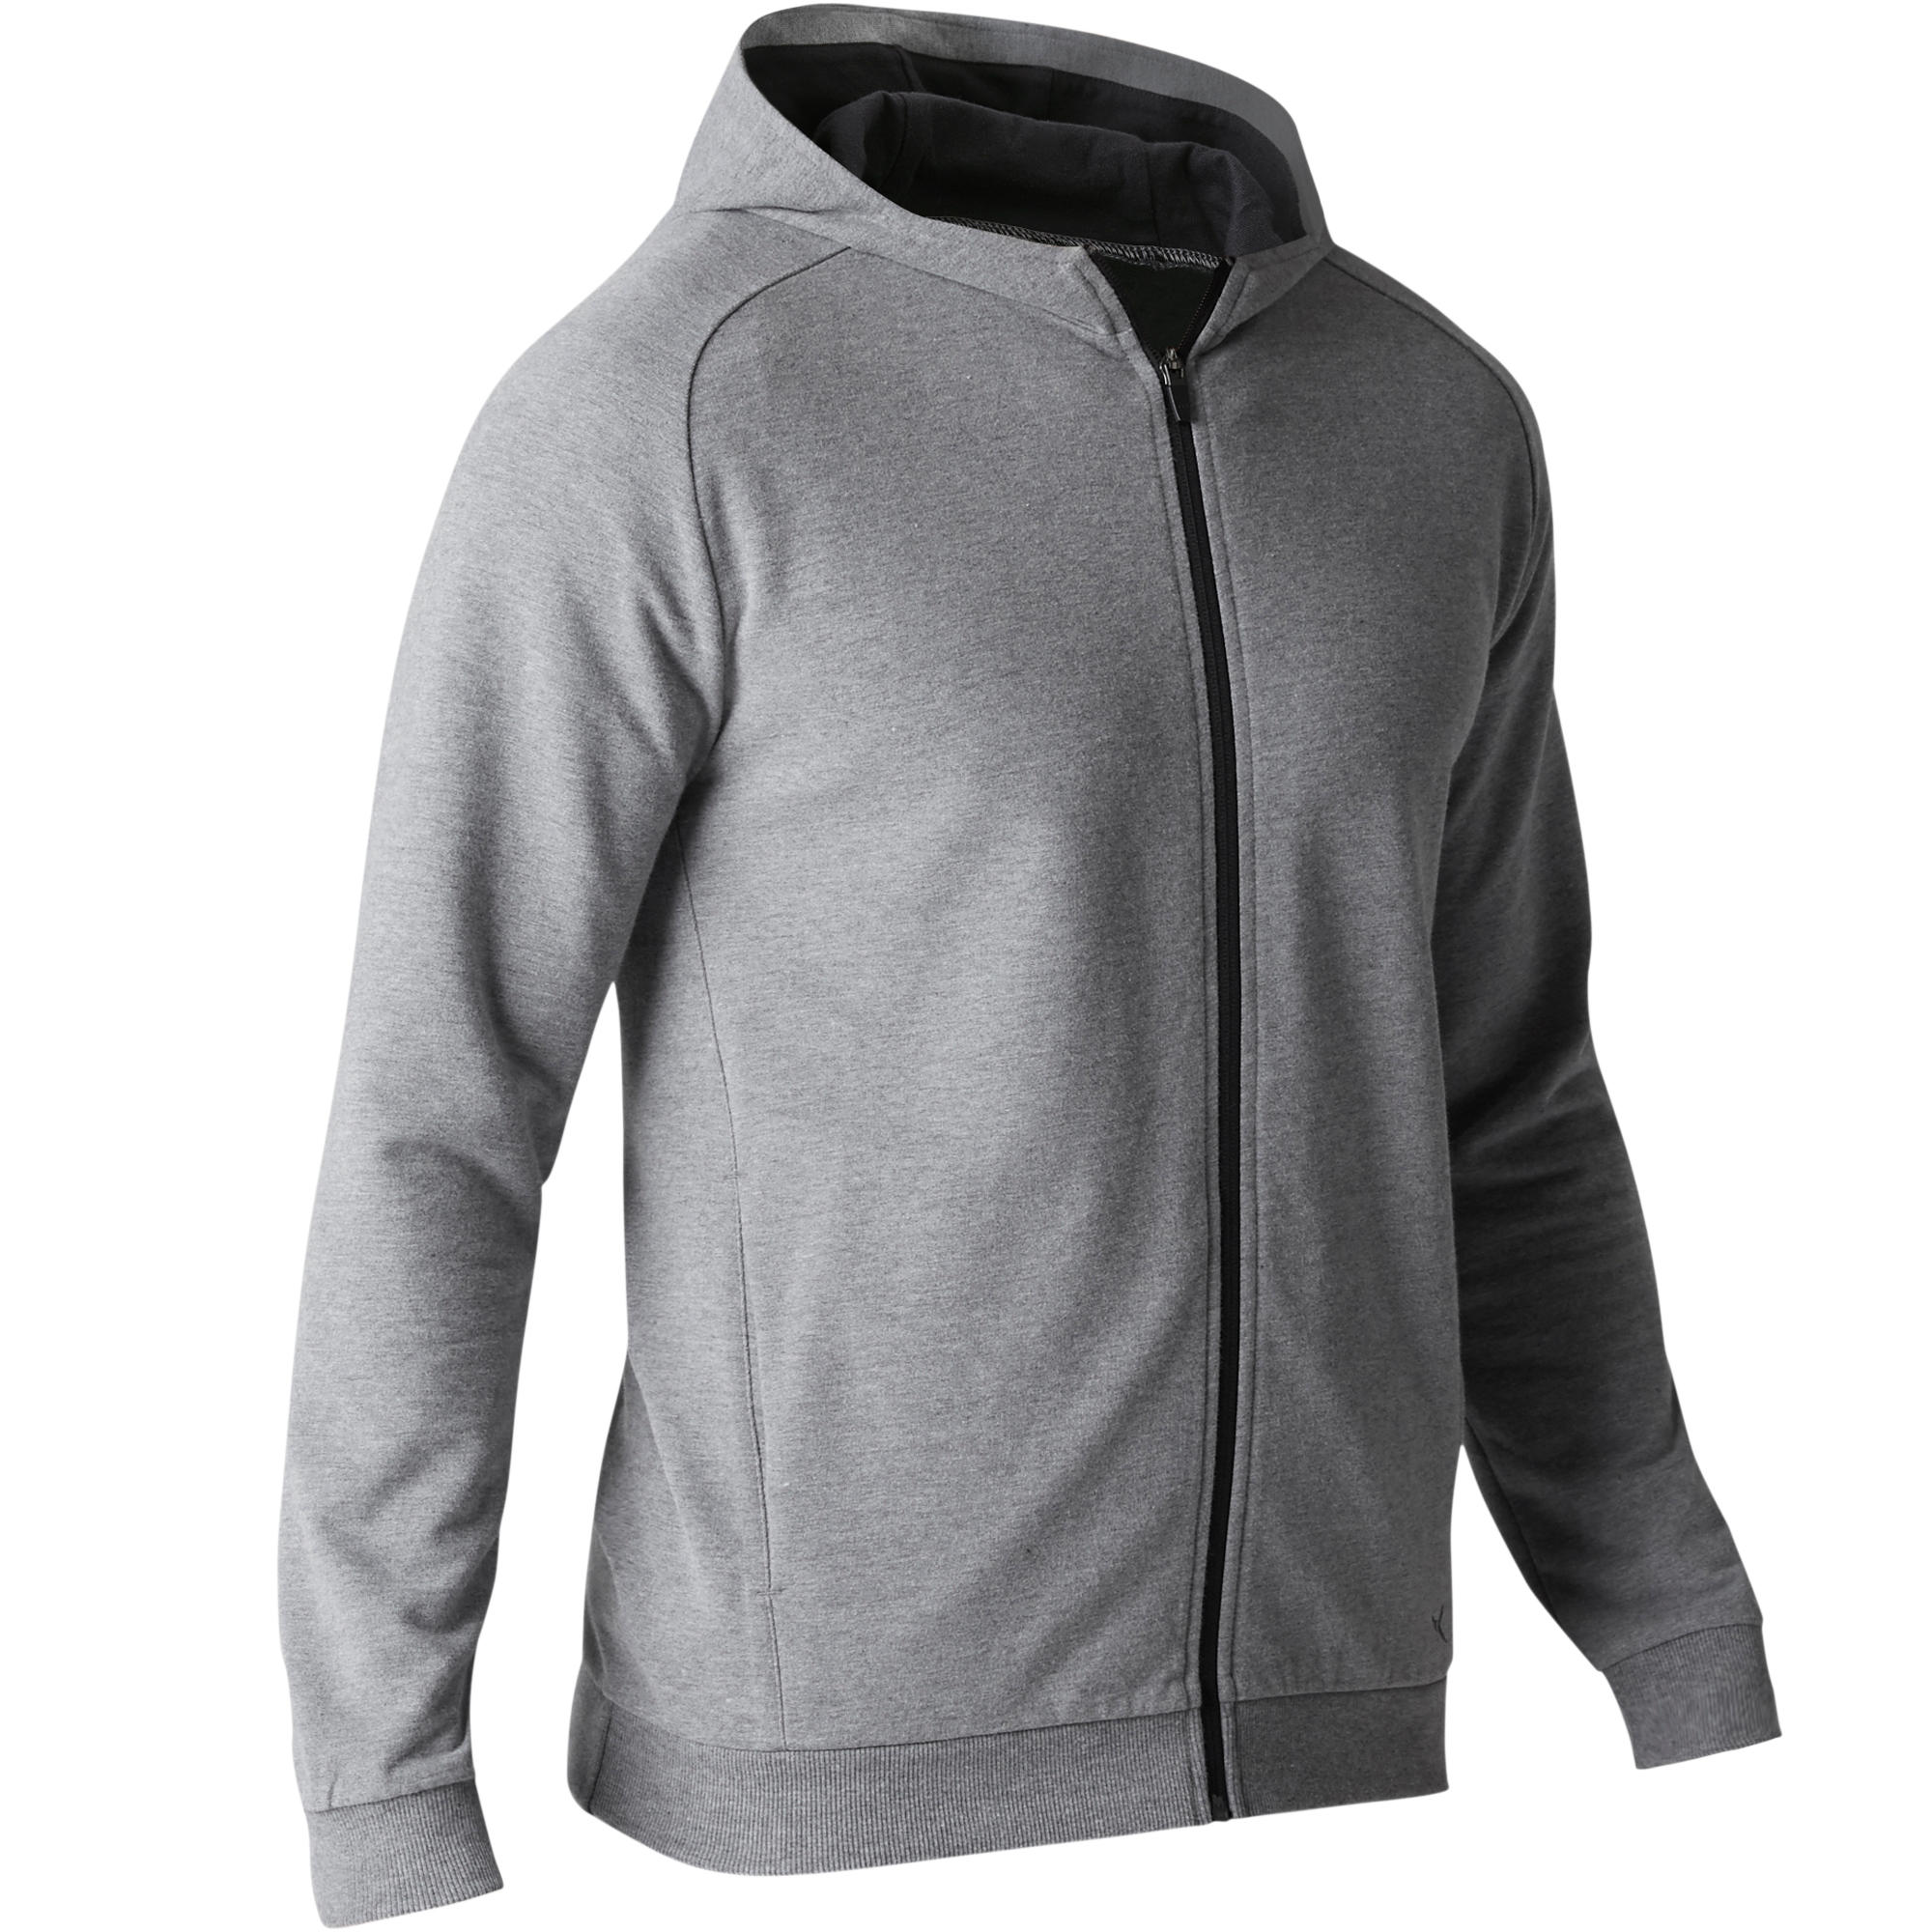 500 Gym Stretching Hooded Jacket - Light Grey